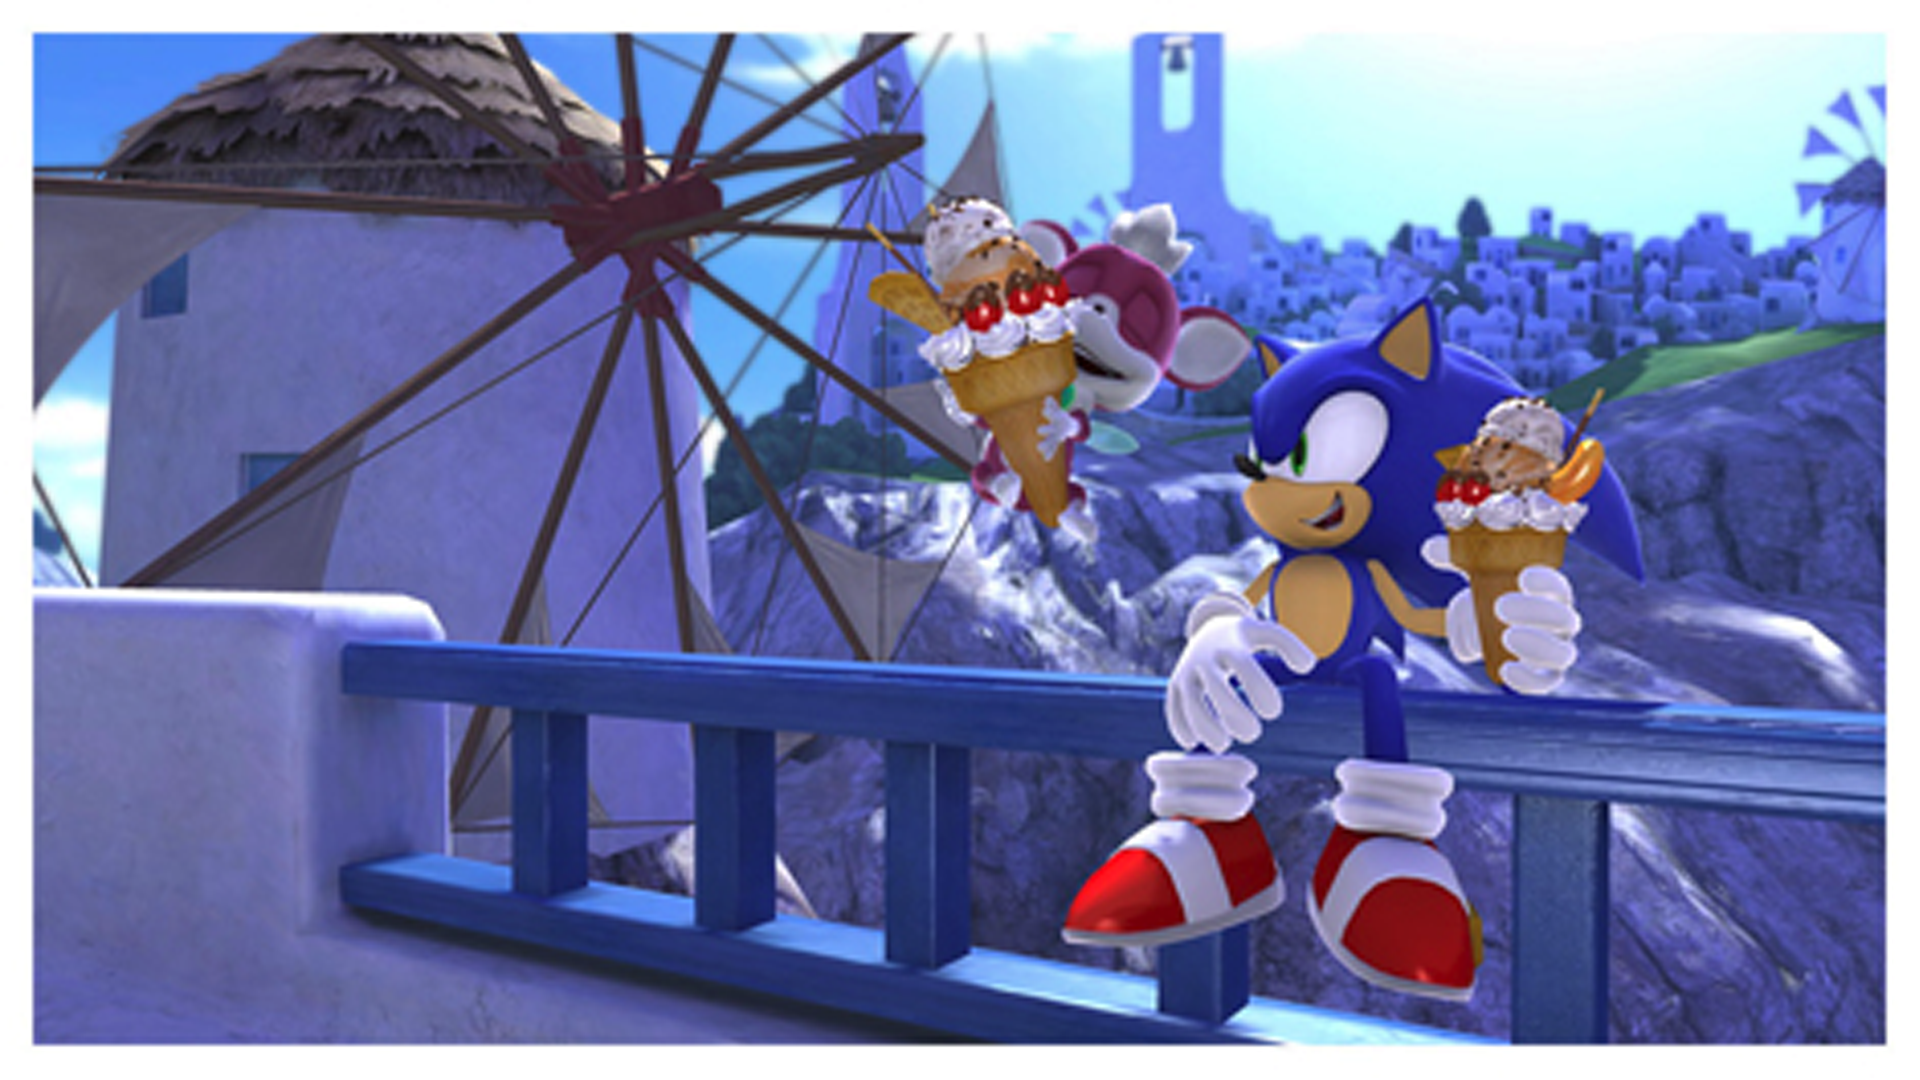 SEGA drops new Sonic Frontiers gameplay footage and screenshots » SEGAbits  - #1 Source for SEGA News